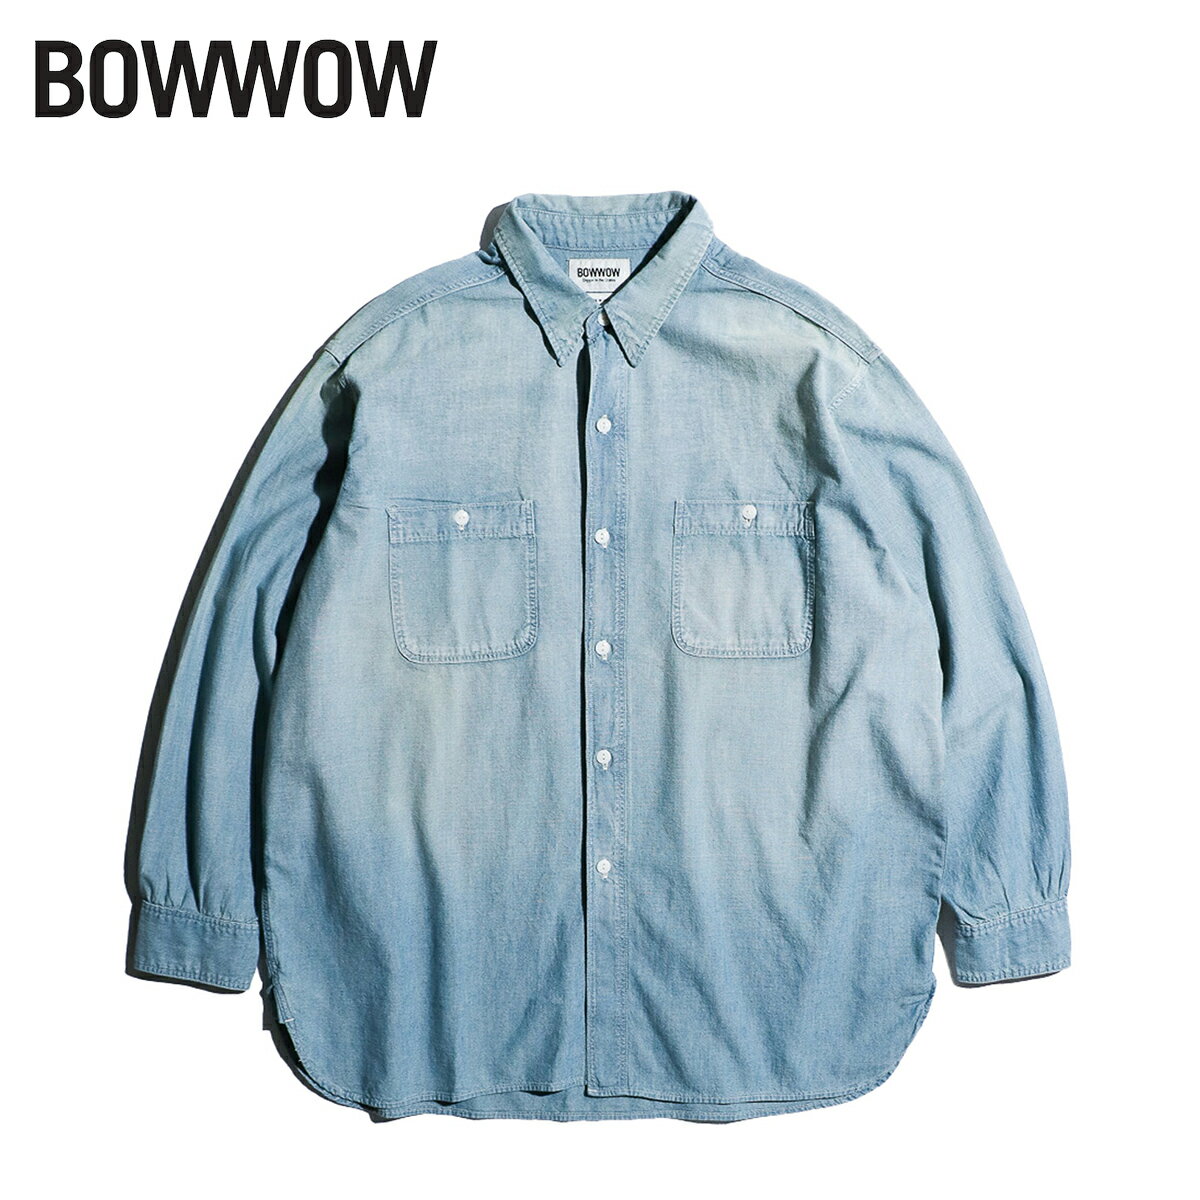 【BOWWOW / バウワウ】 CHAMBRAY SHIRTS SUNBURN AGEING (BW241-CSSA) ヴィンテージ加工 サンフェード シャンブレーシャツ